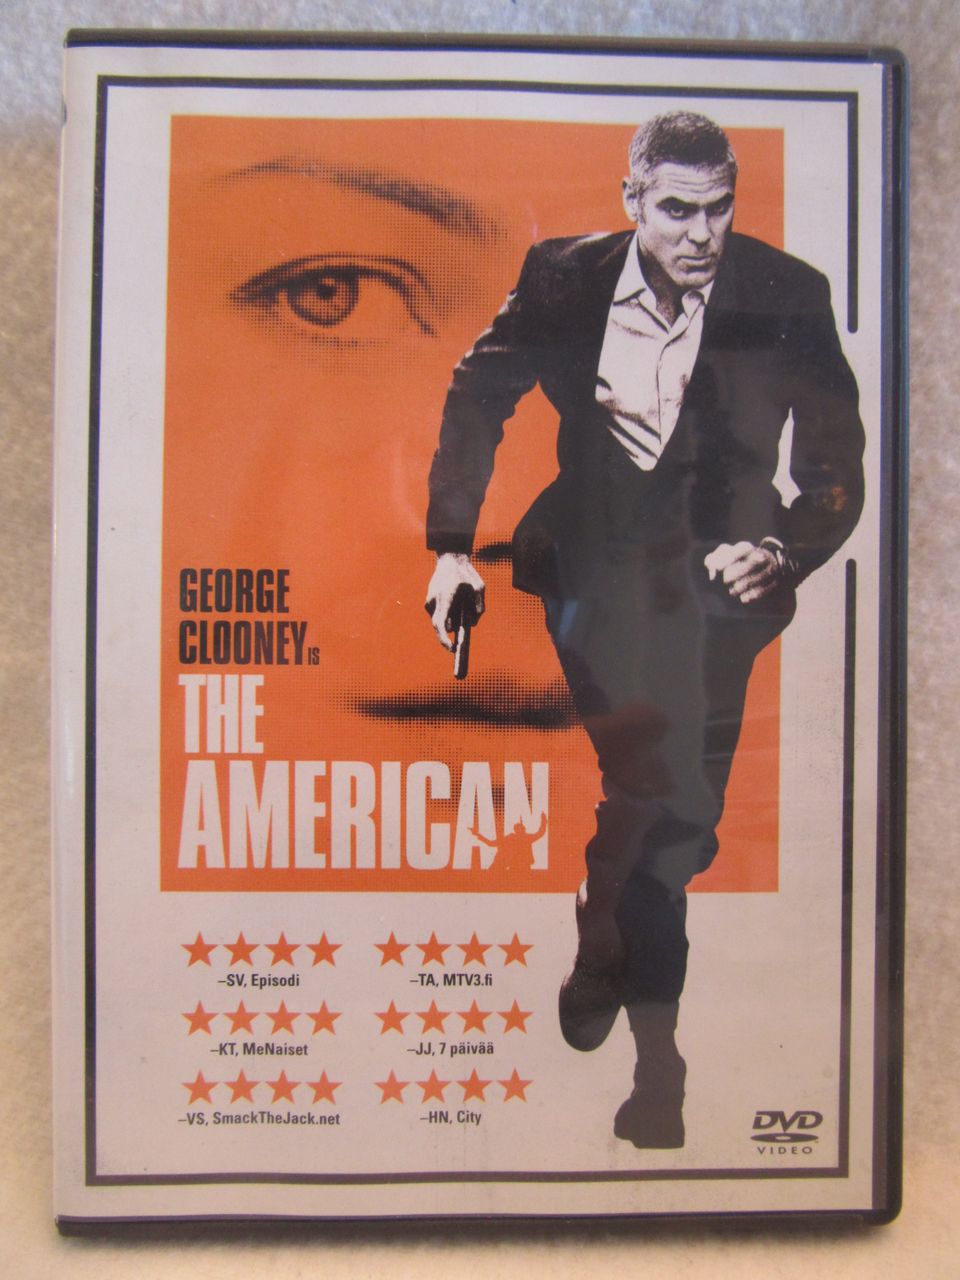 The American dvd